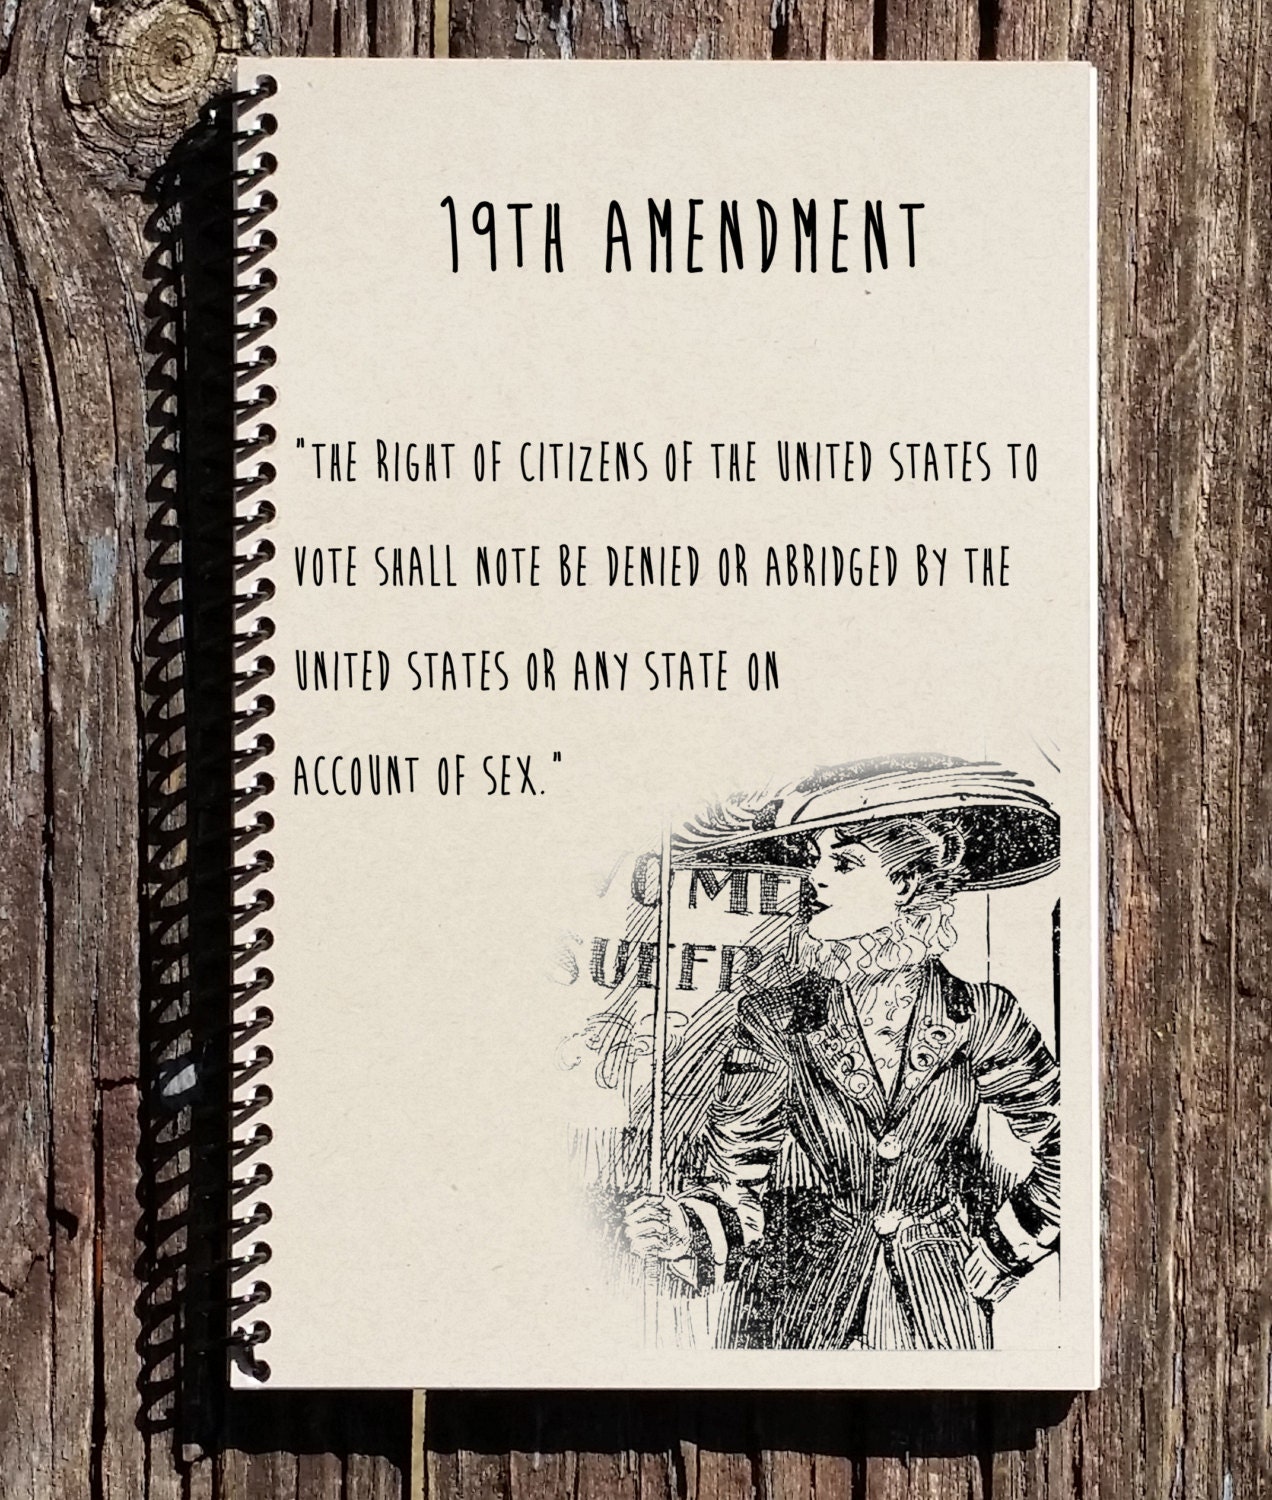 19th Amendment - Definition, Passage & Summary - HISTORY